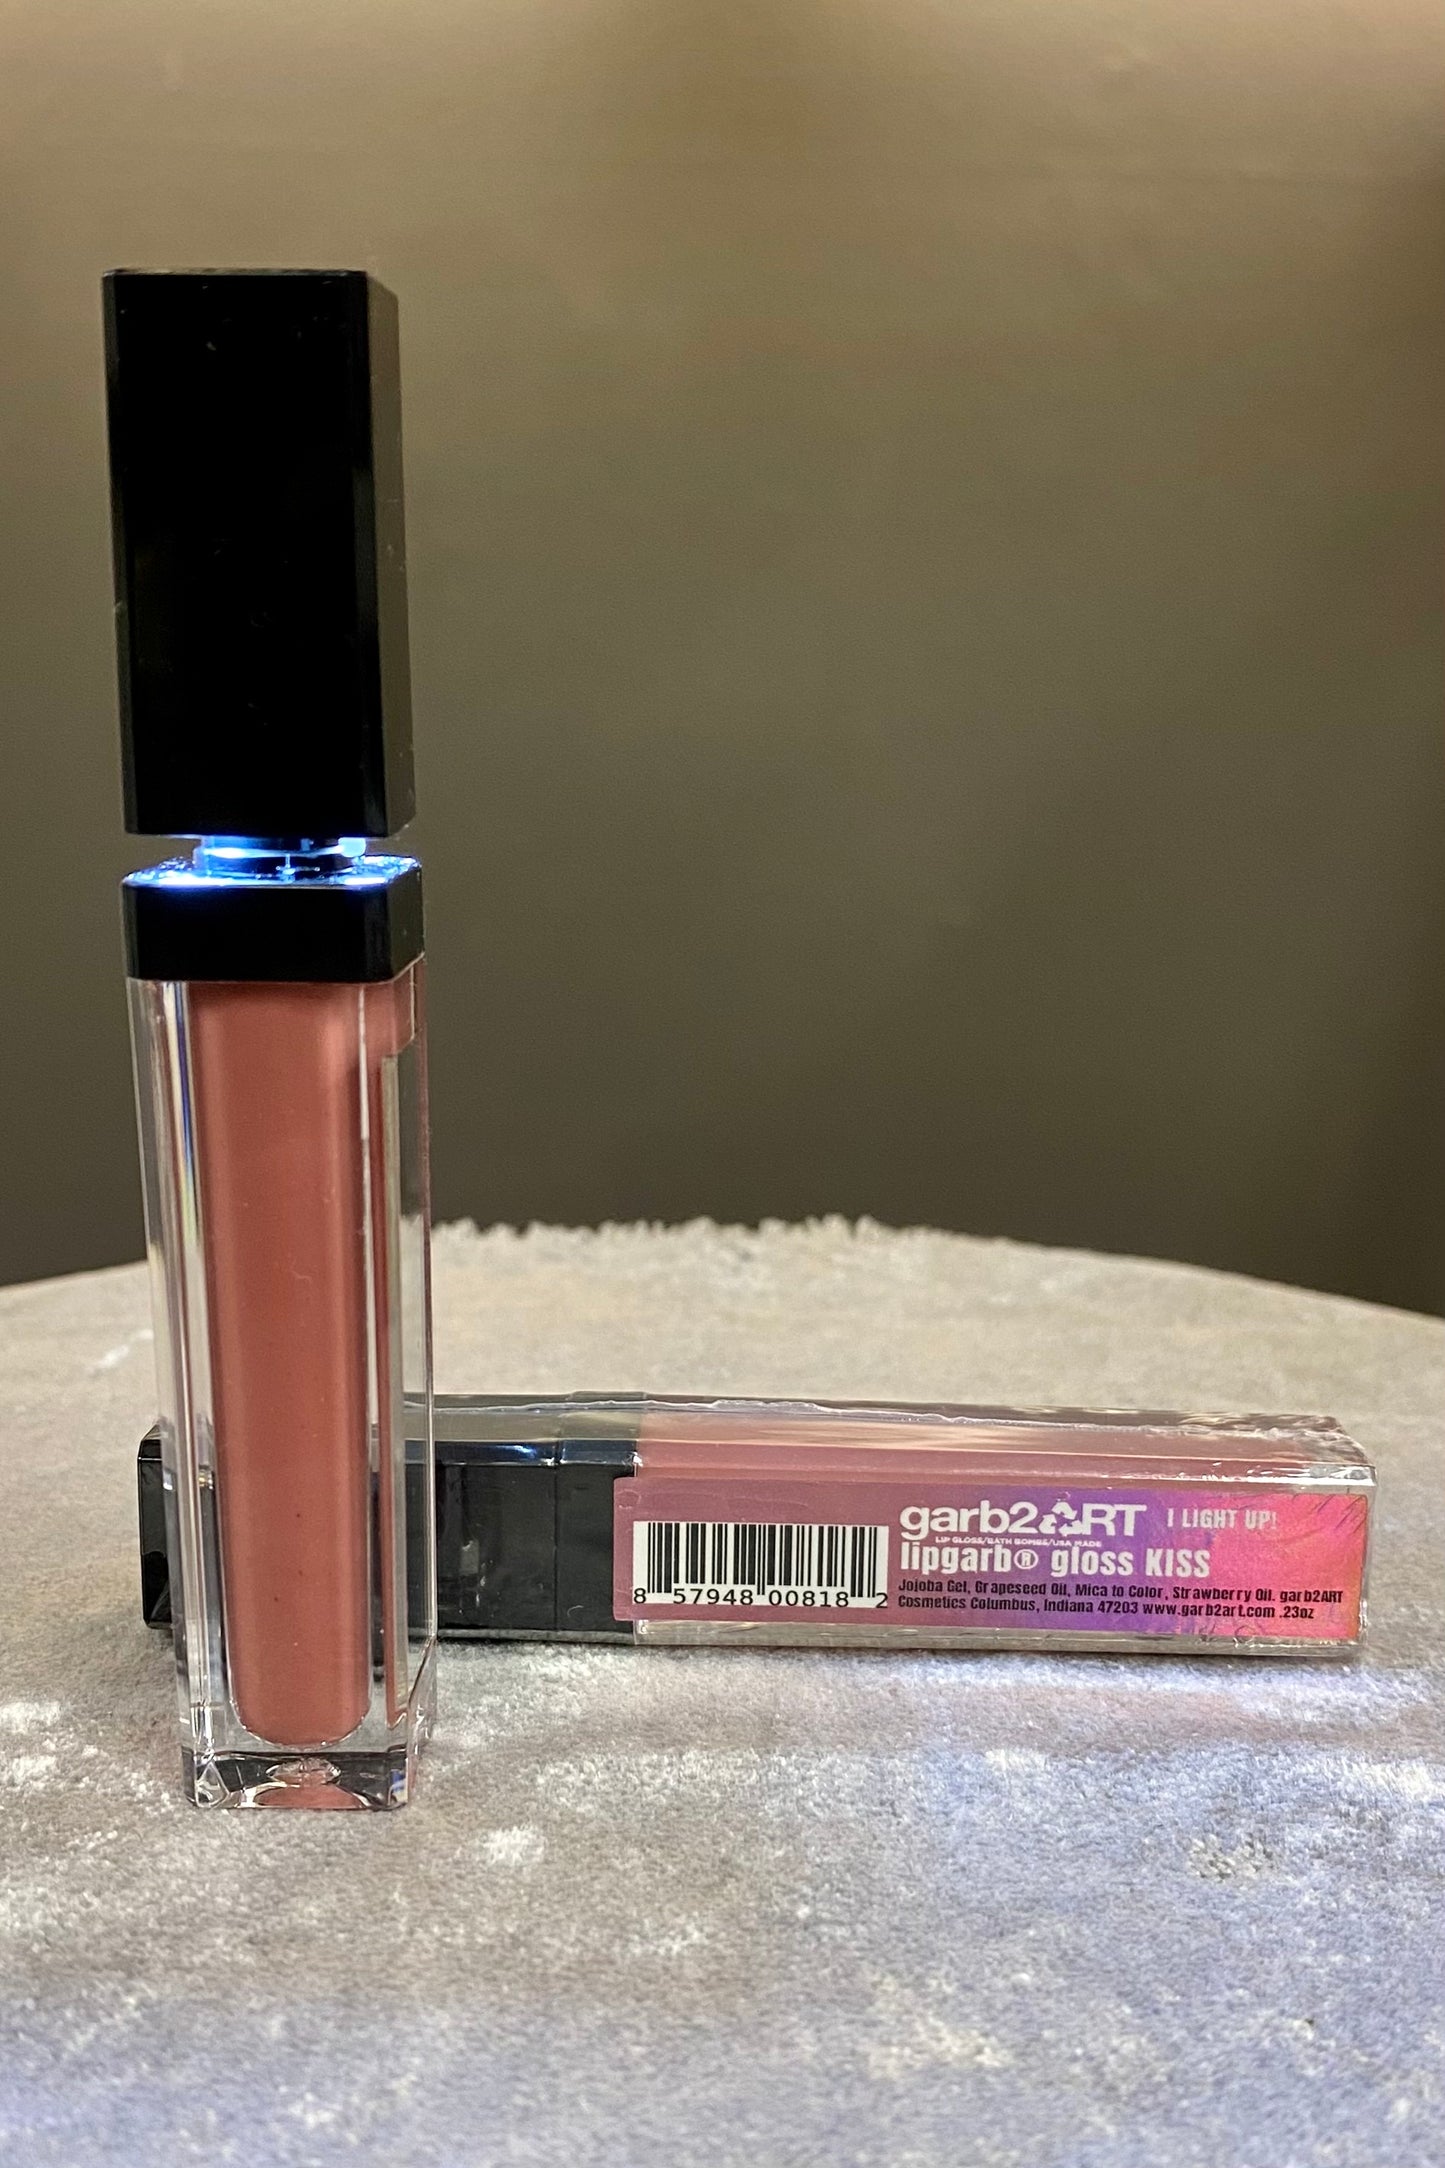 LipGarb Lighted Lip Gloss by Garb2Art